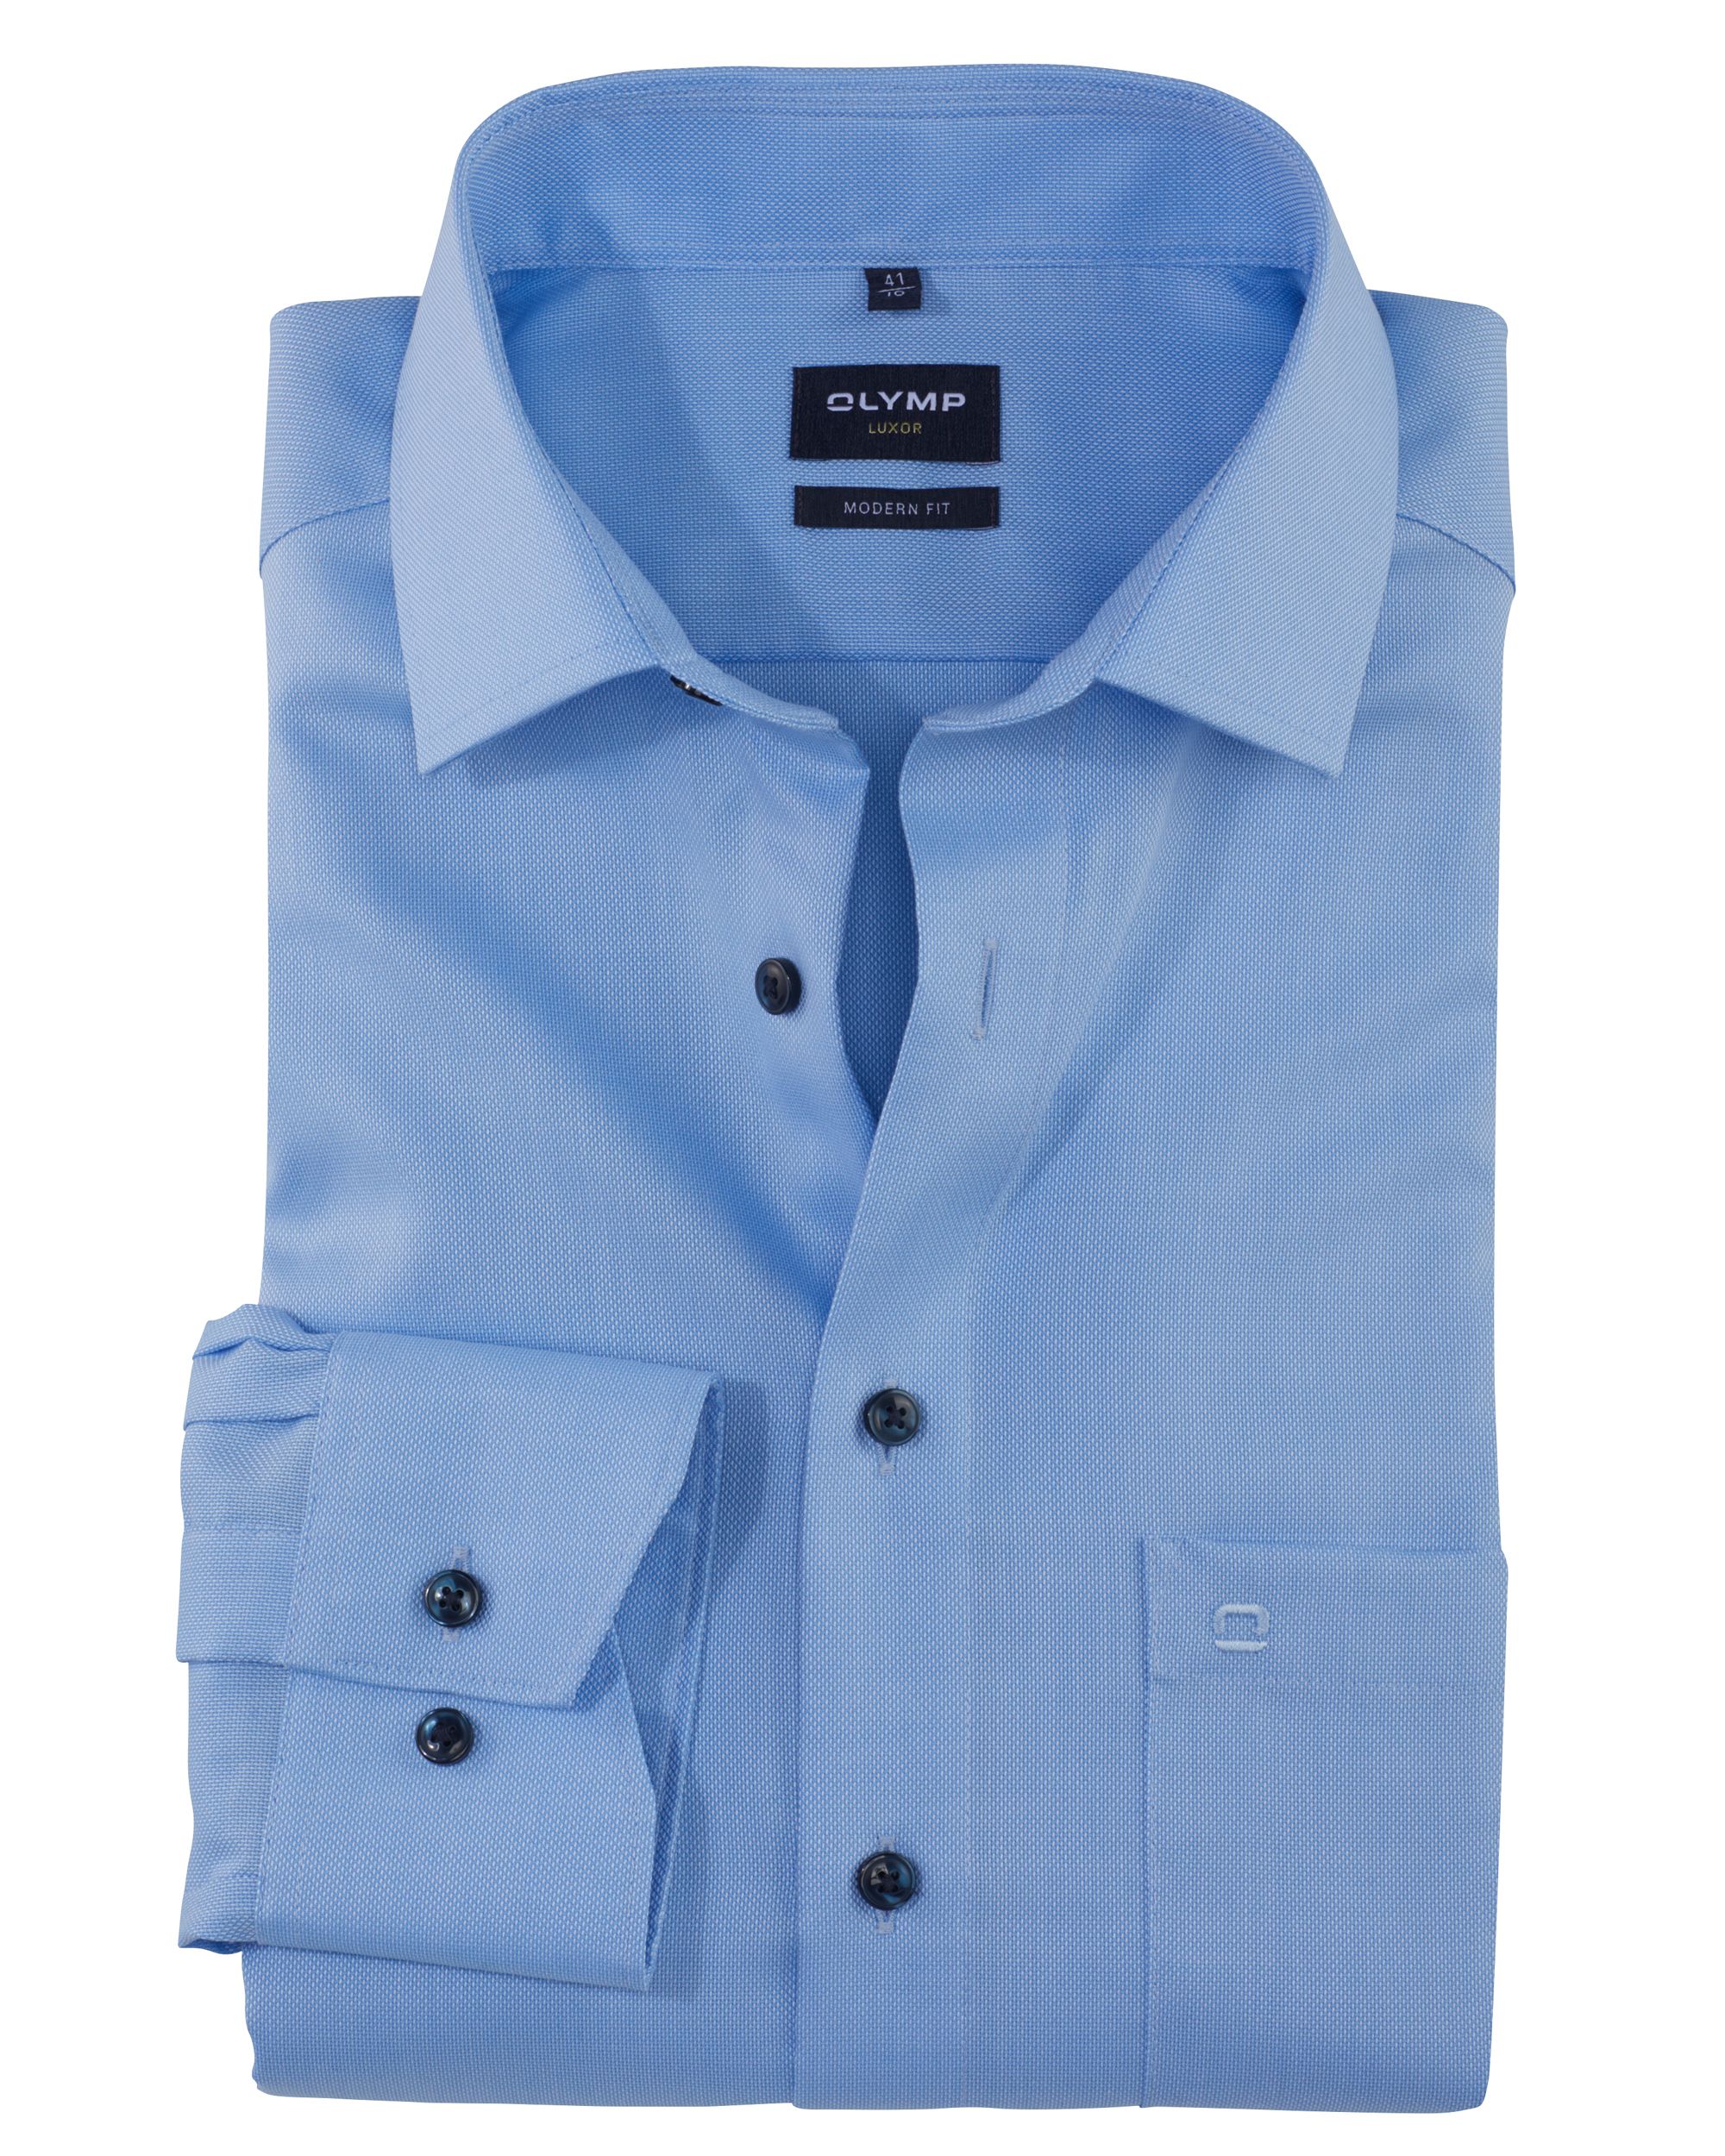 OLYMP Overhemd LM Blauw 093892-001-37